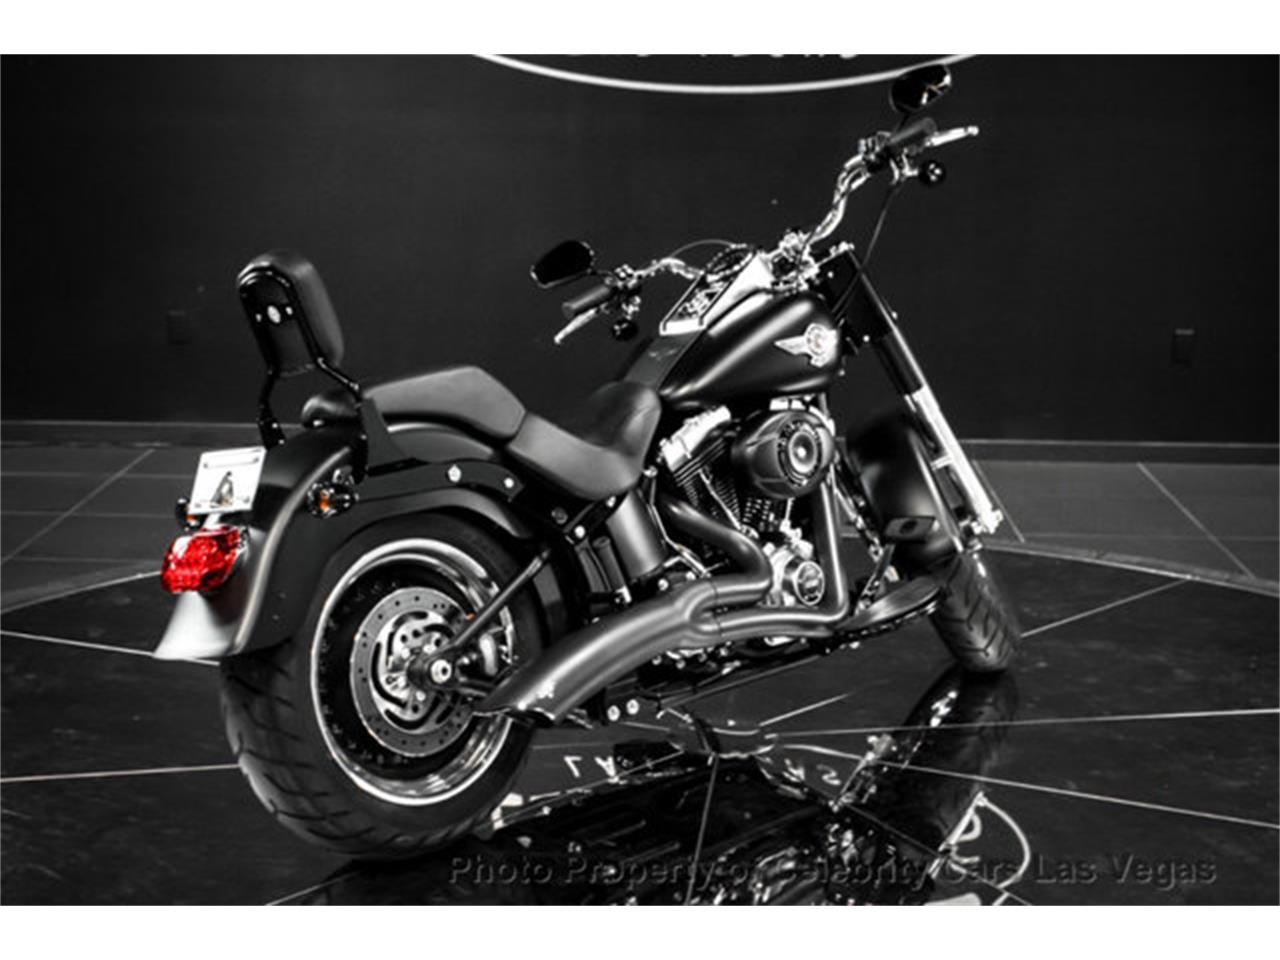 2013 Harley-Davidson Motorcycle for sale in Las Vegas, NV ...